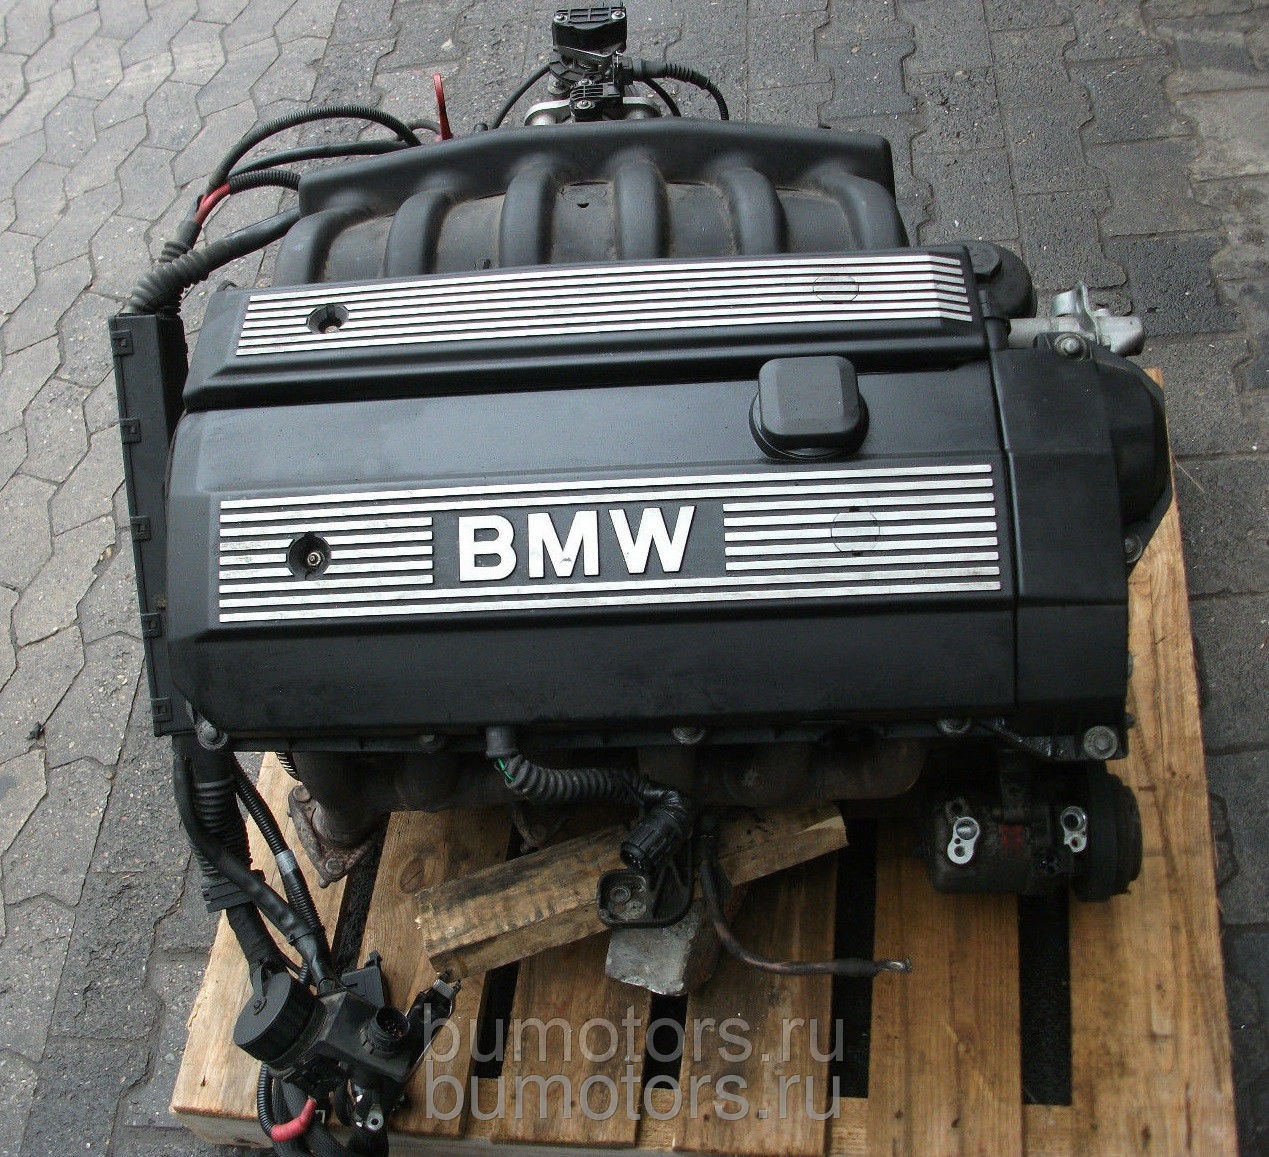 М 52 купить. Мотор БМВ м52 2.5. BMW m52 двигатель. М 52 мотор БМВ. М52 двигатель БМВ.